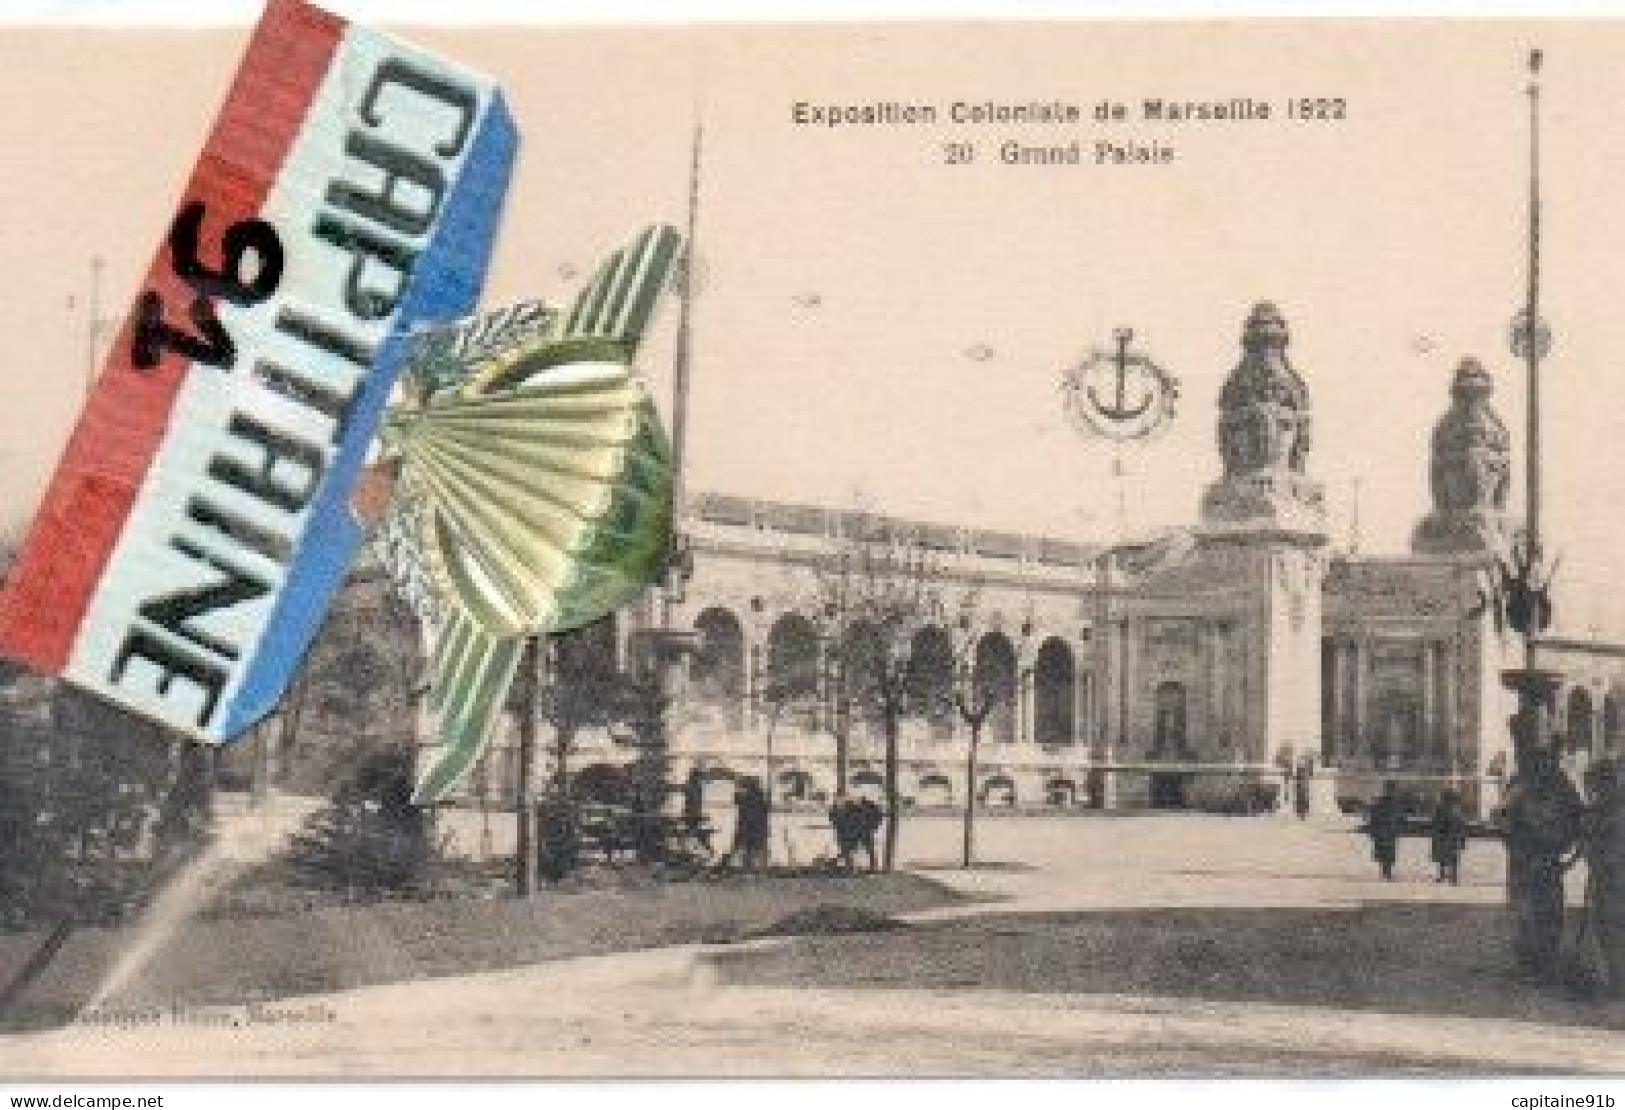 CPA EXPOSITION COLONIALE DE MARSELLE 1922 BOUCHES DU RHONE GRAND PALAIS. X X - Expositions Coloniales 1906 - 1922